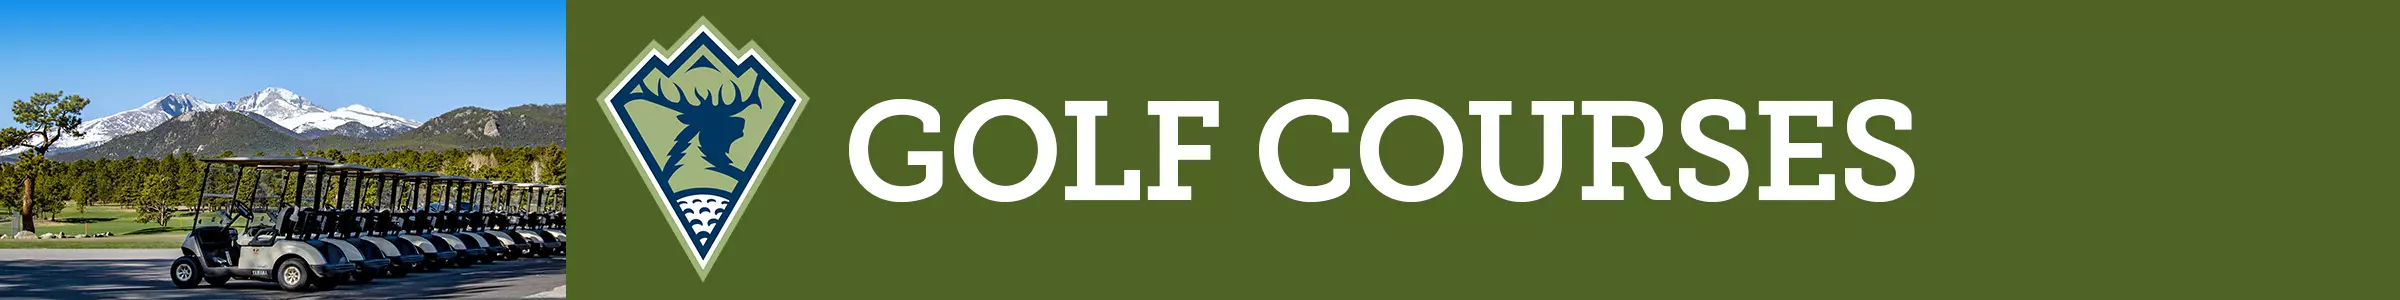 Estes Park 18-Hole Golf Course, Lake Estes 9-Hole Executive Golf Course and Disc Golf at the 9-Hole